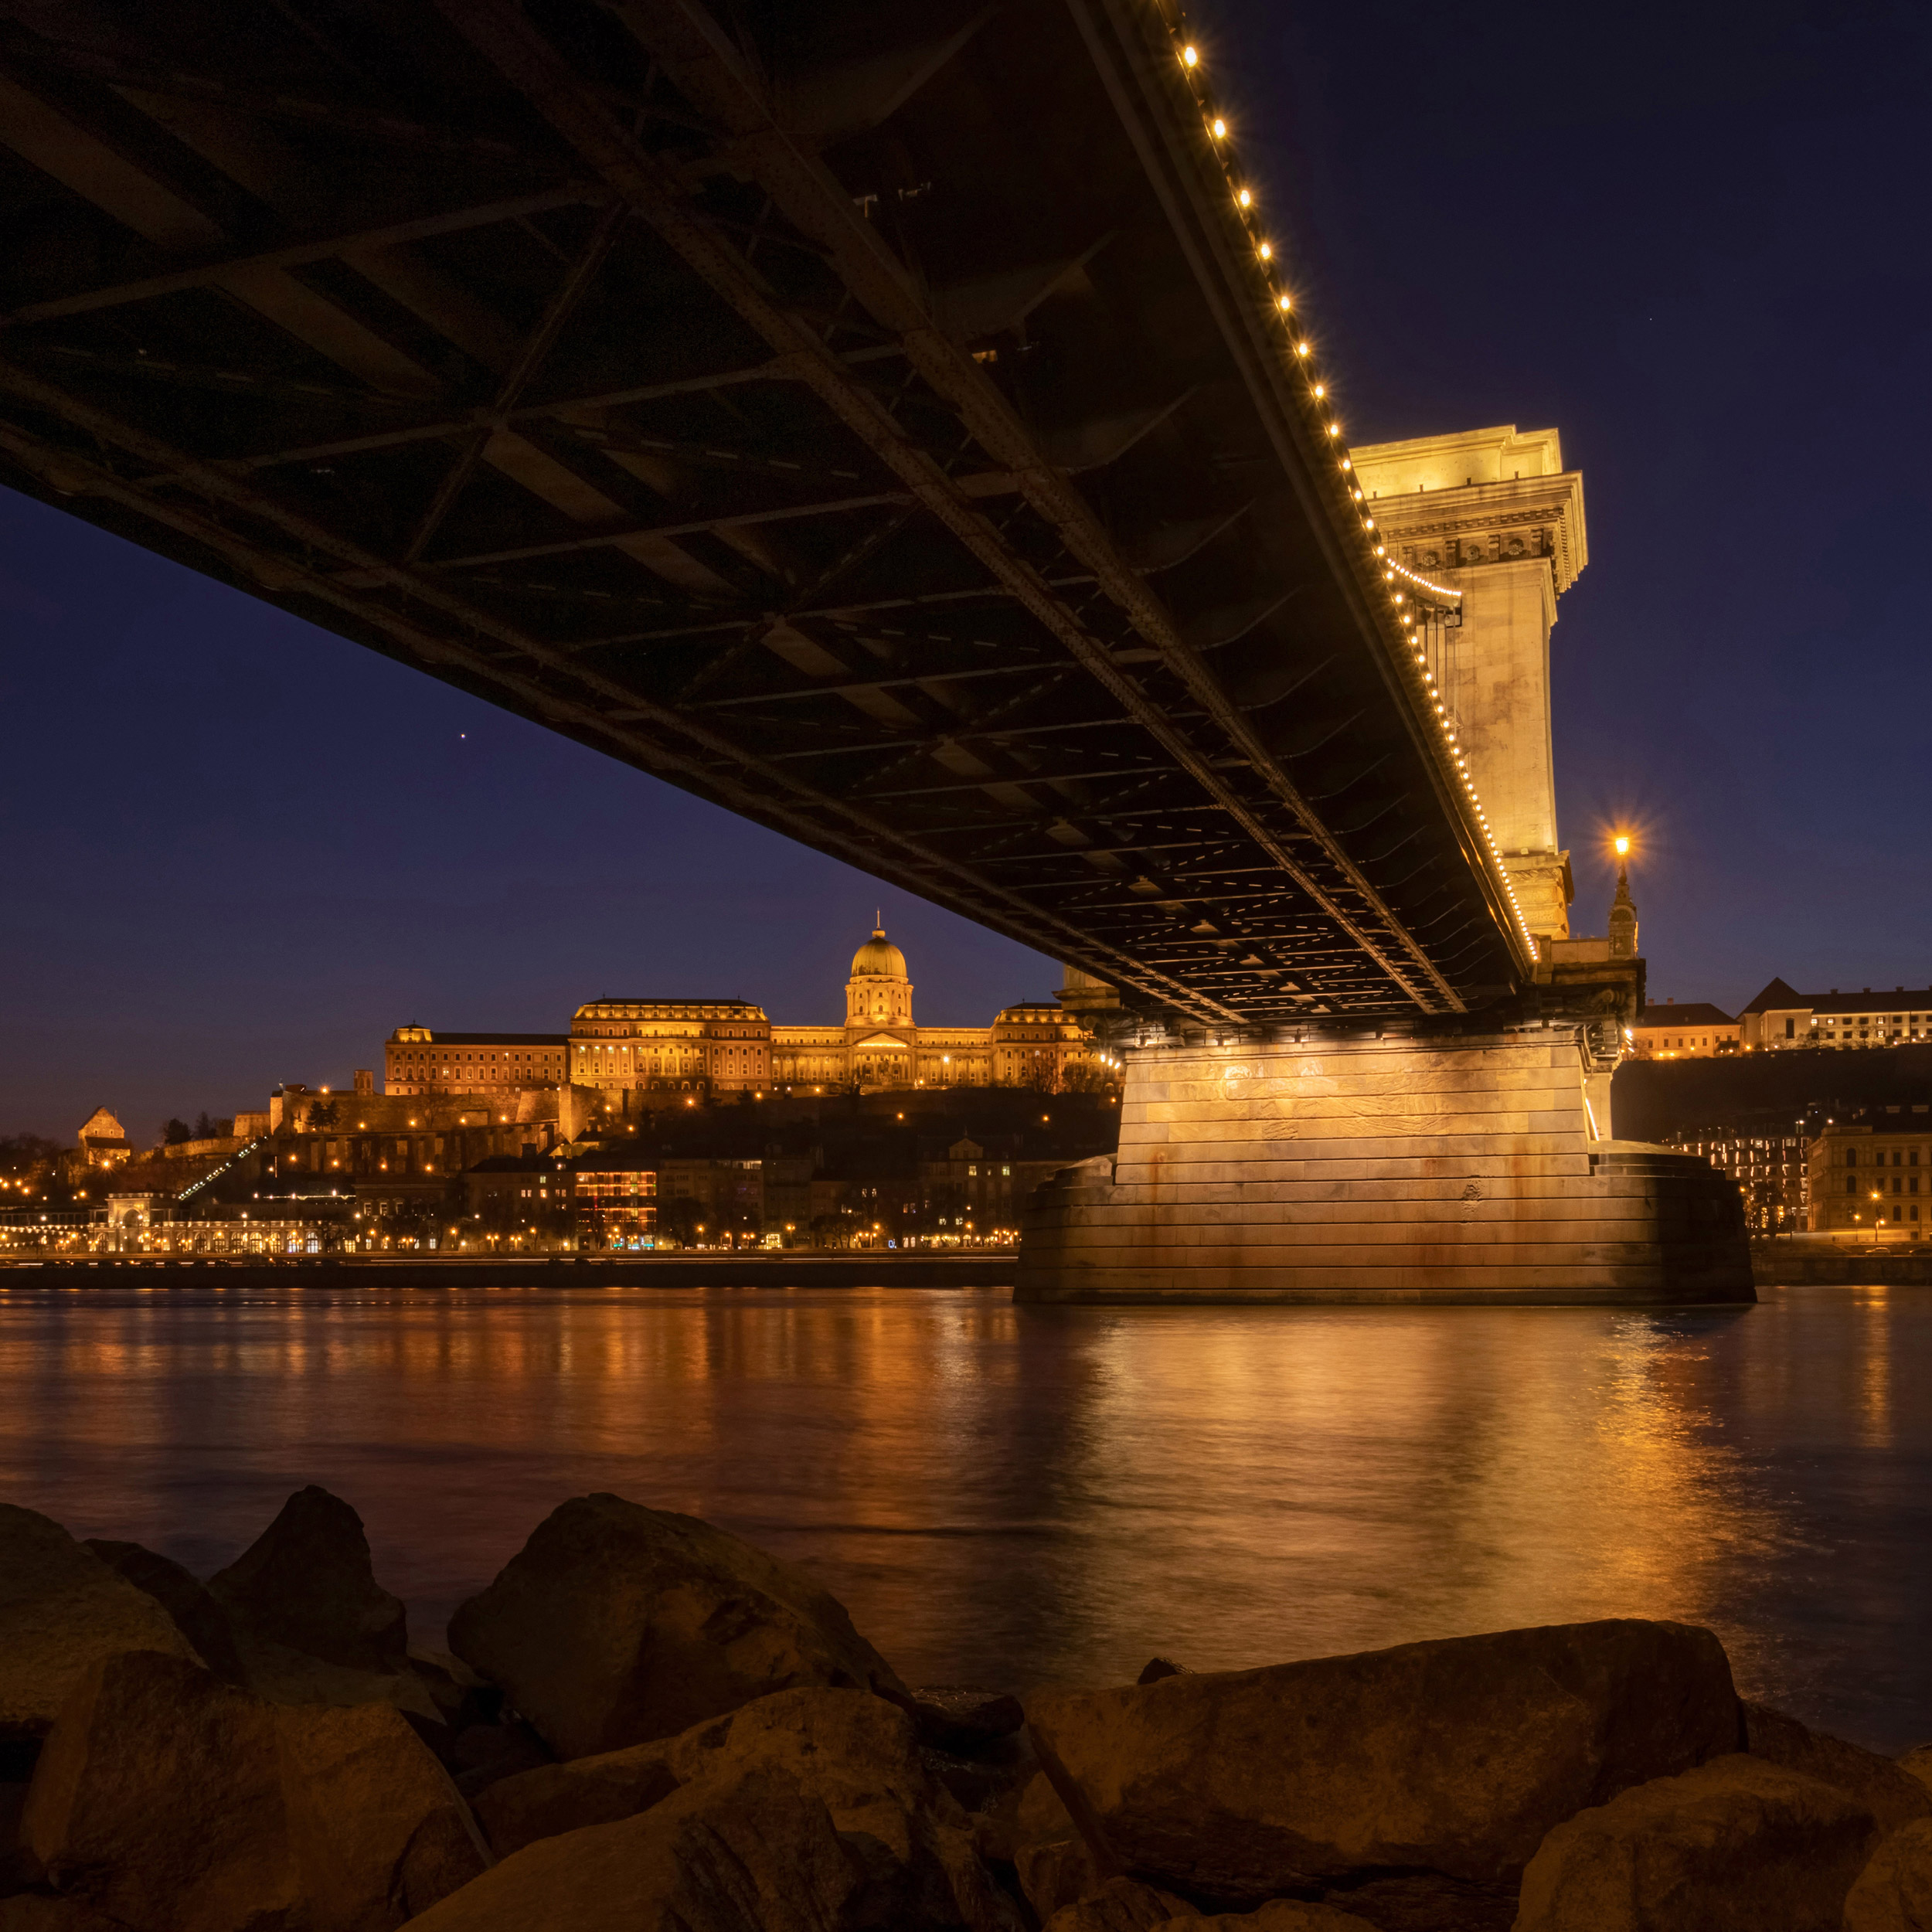 The Szechenyi Chain Bridge (Budapest, Hungary) with Buda Castle